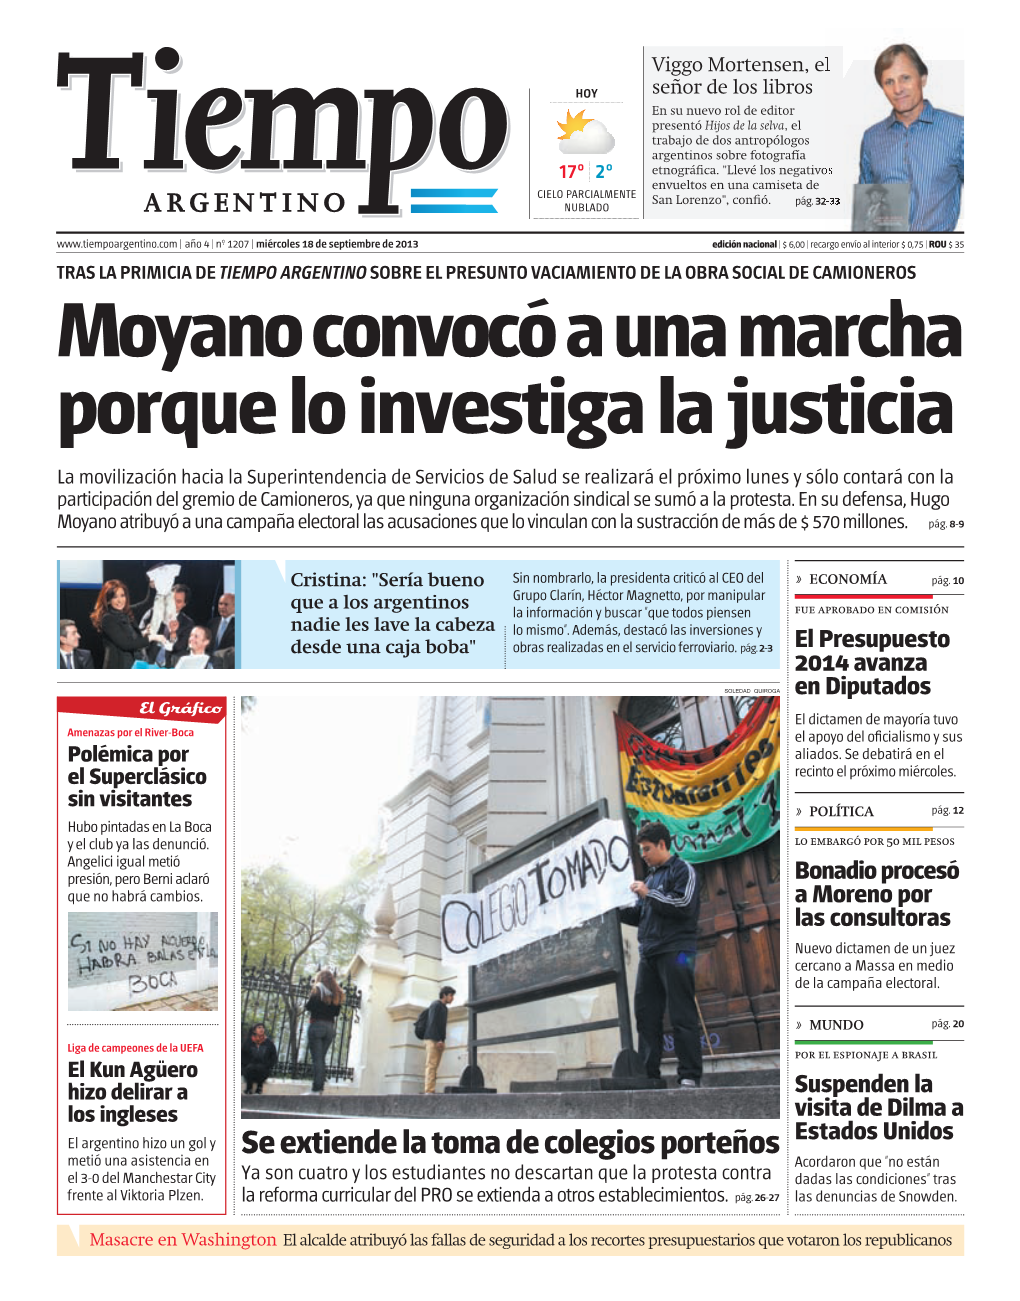 Moyano Convocó a Una Marcha Porque Lo Investiga La Justicia